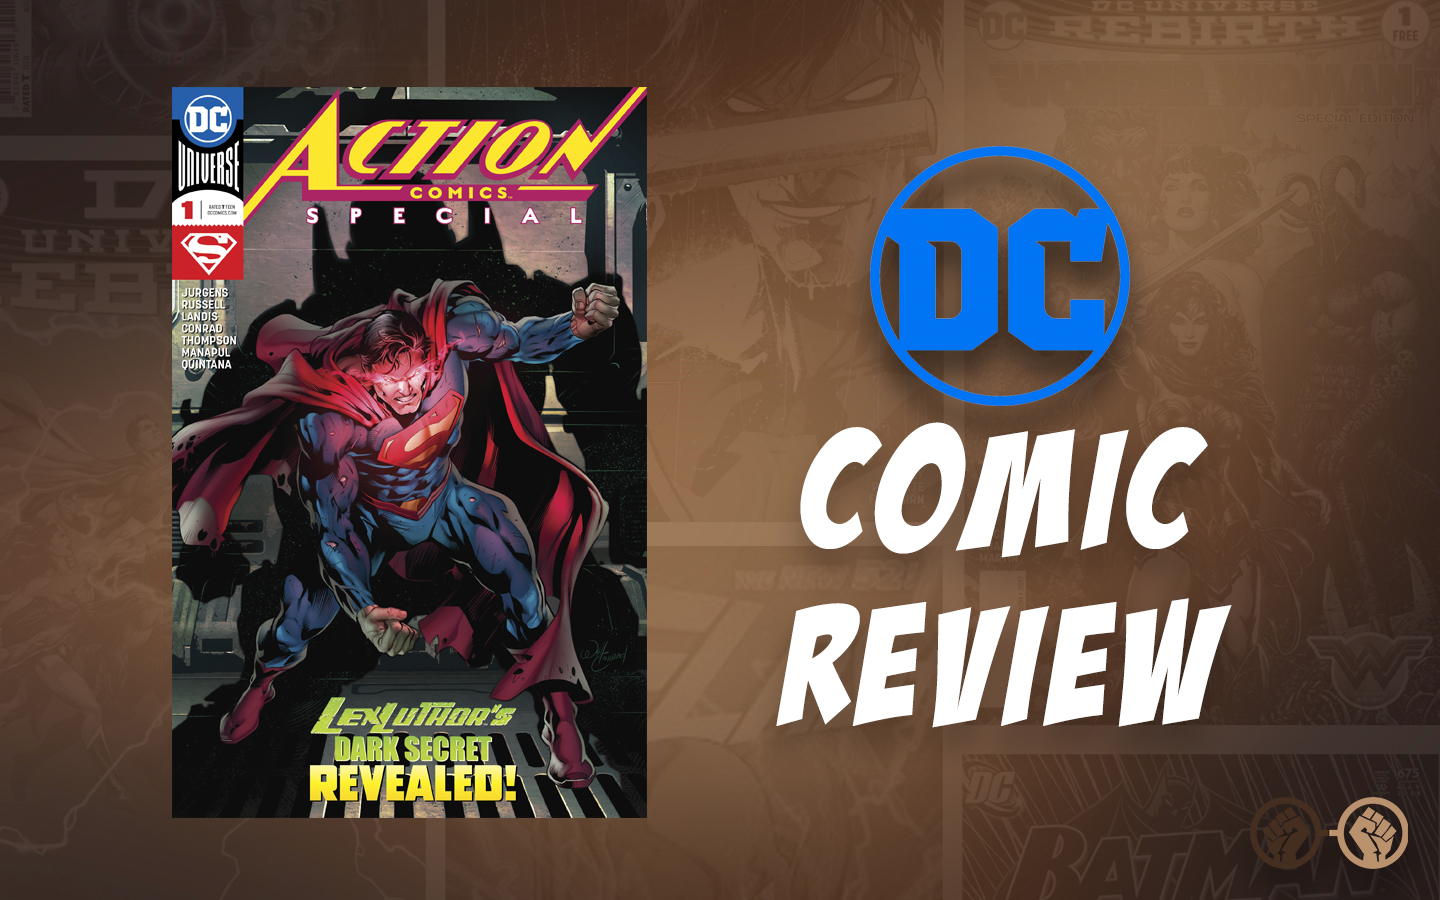 GOC Comic Reviews: ‘Action Comics Special #1’